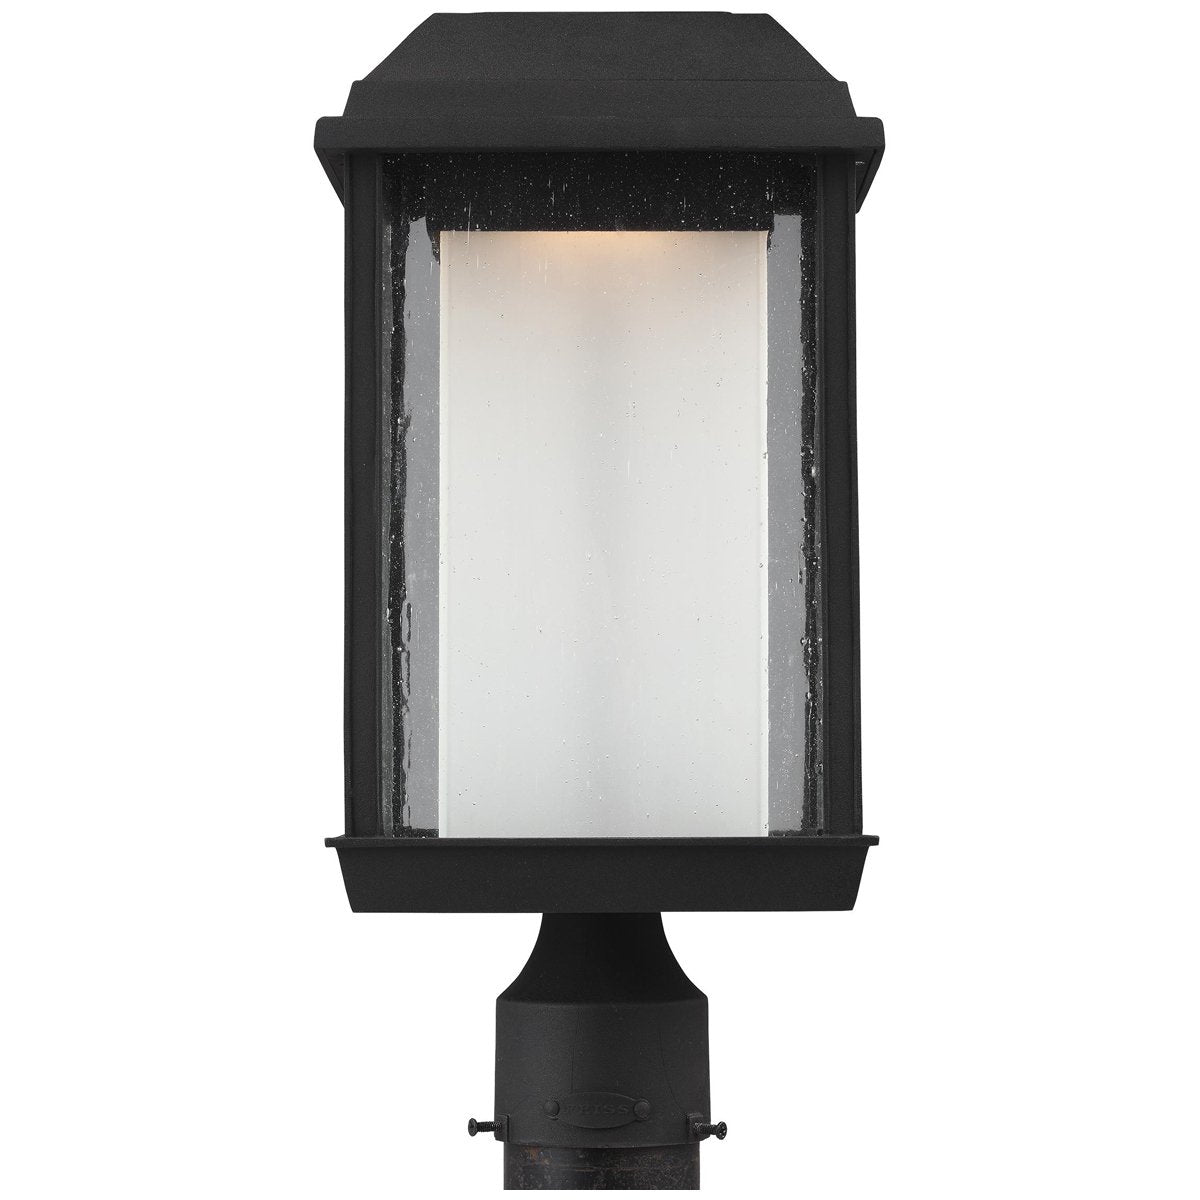 Feiss McHenry 1-Light Outdoor Post Lantern